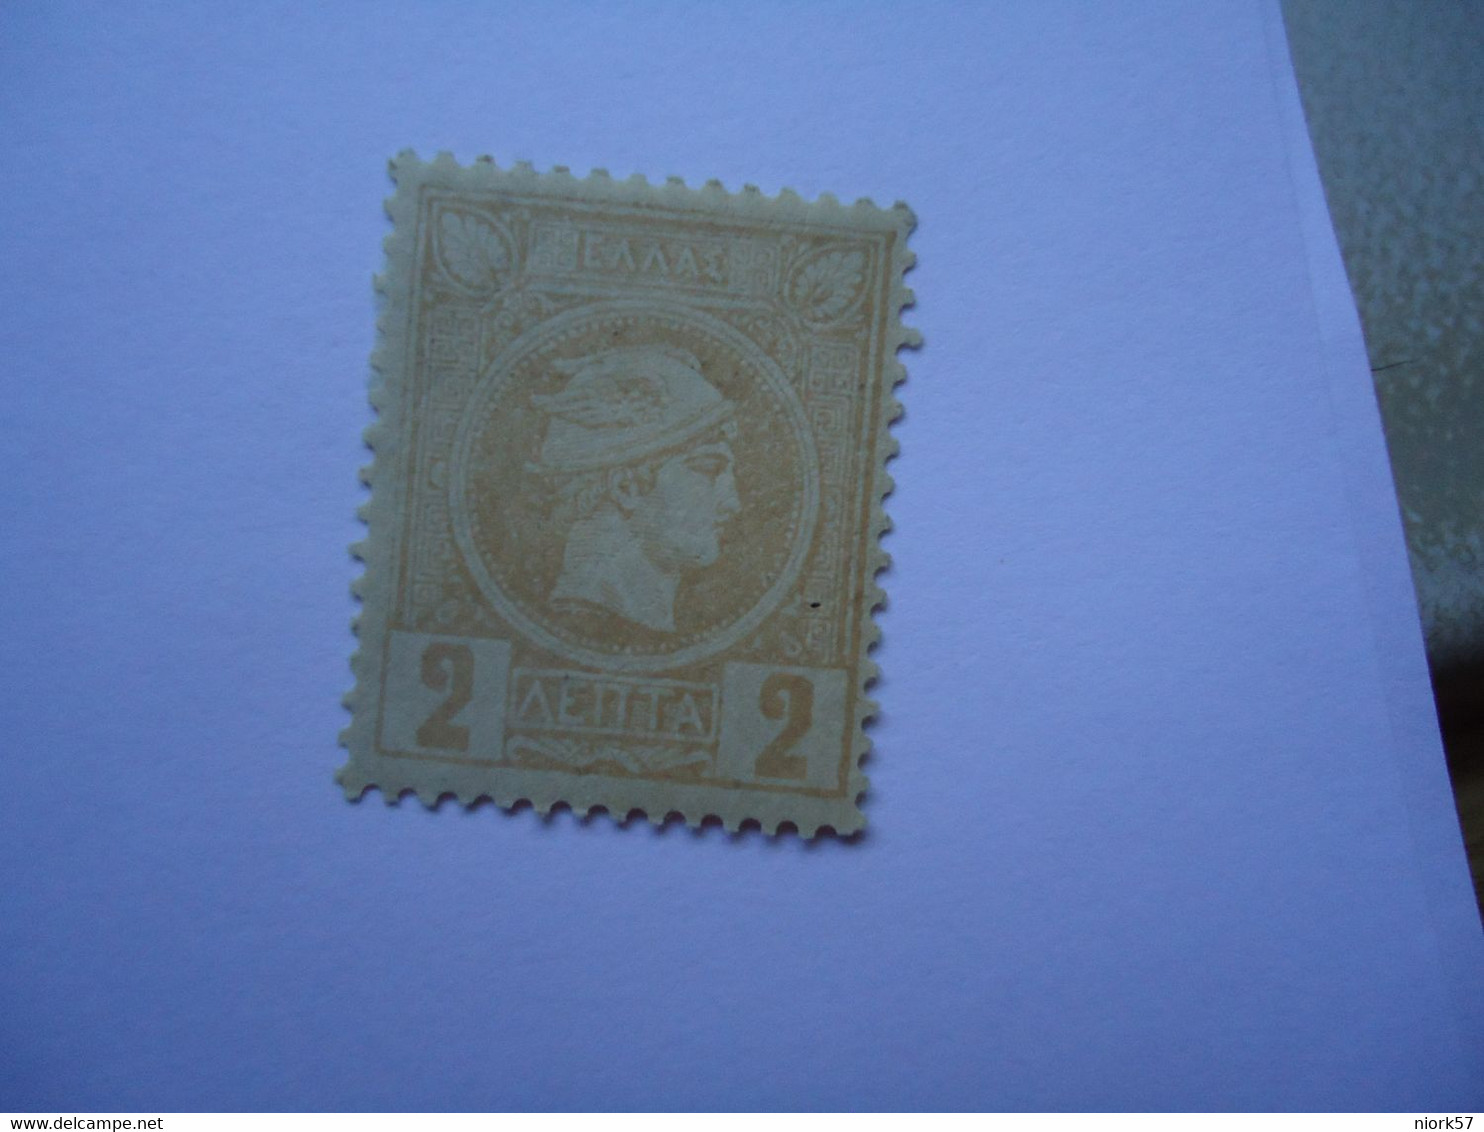 GREECE  MINT SMALL HEAD HERMES 2 LEPTA - Unused Stamps